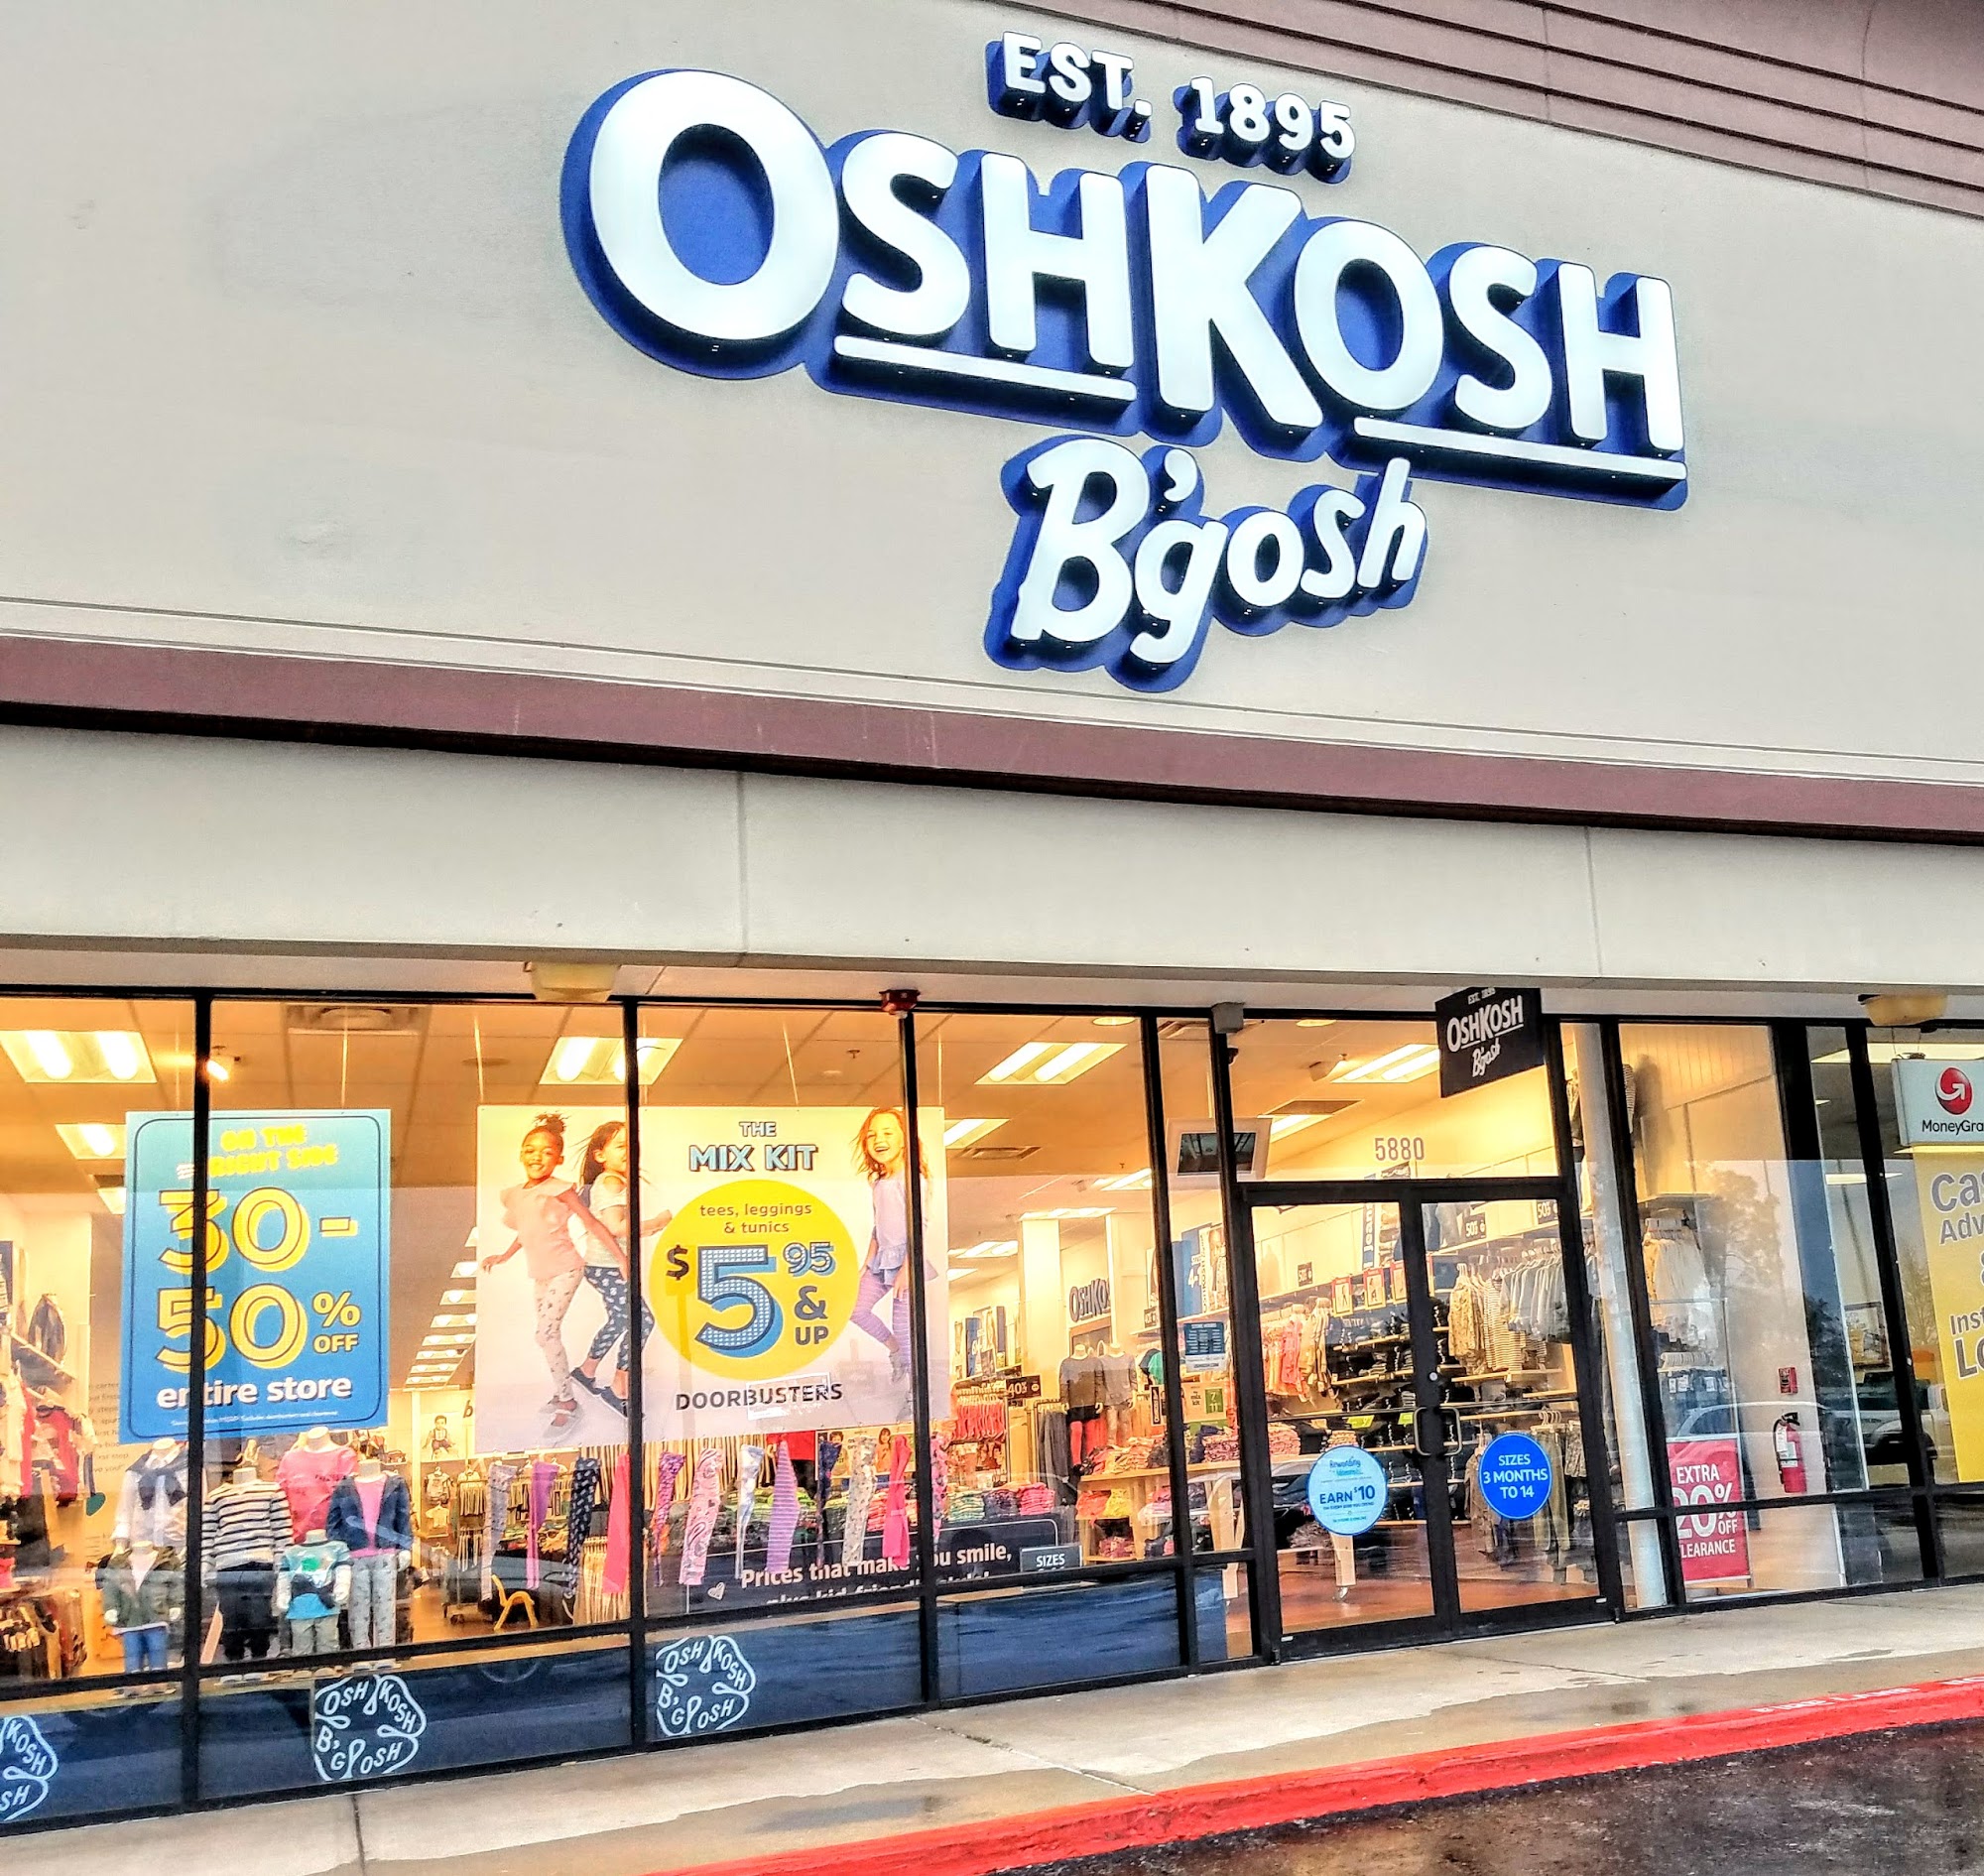 OshKosh B'Gosh